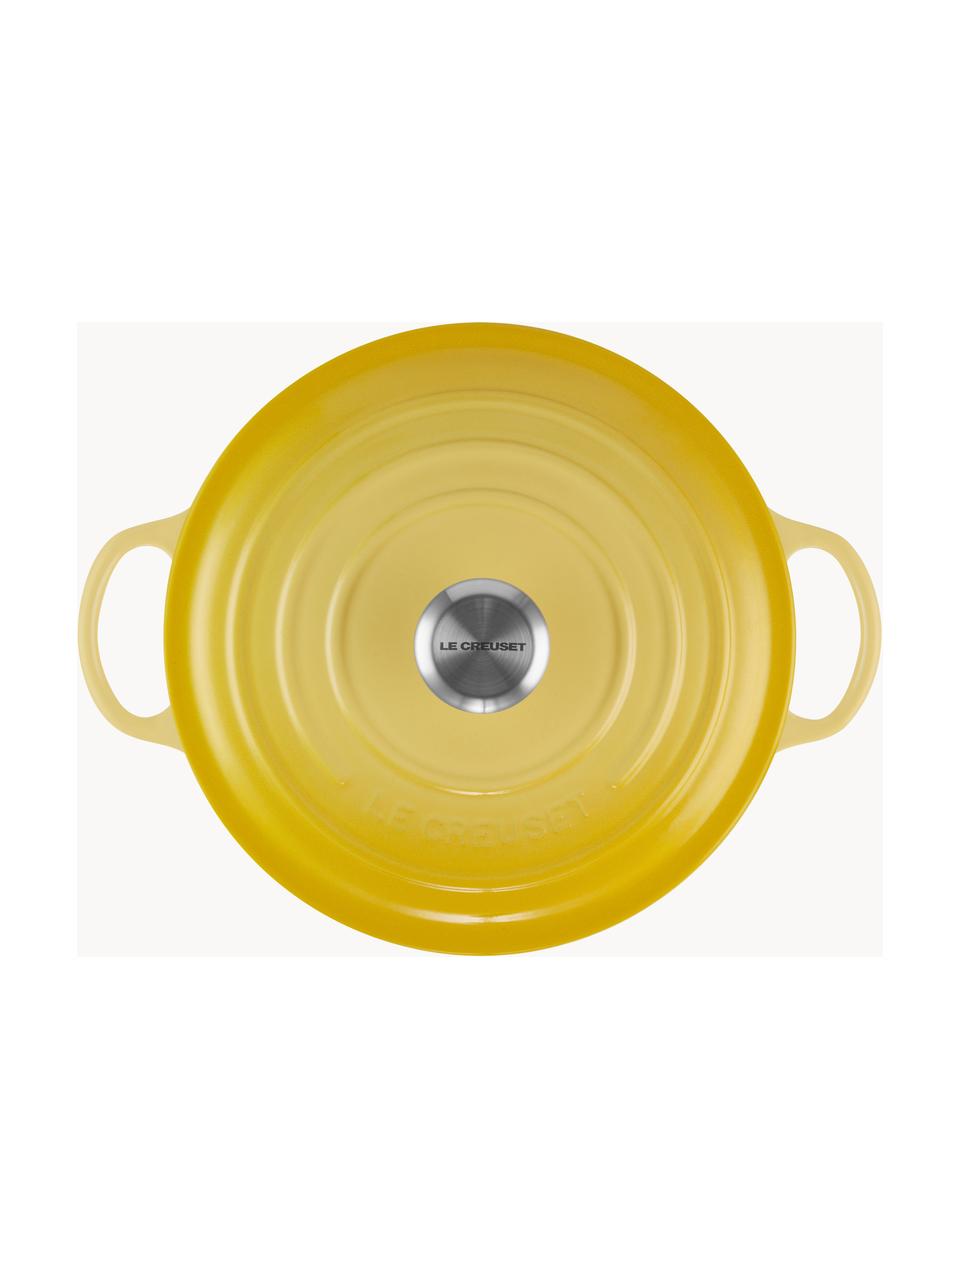 Litinový hrnec La Marmite Signature Collection, Smaltovaná litina, Odstíny žluté, Ø 26 cm, V 14 cm, 4,1 l